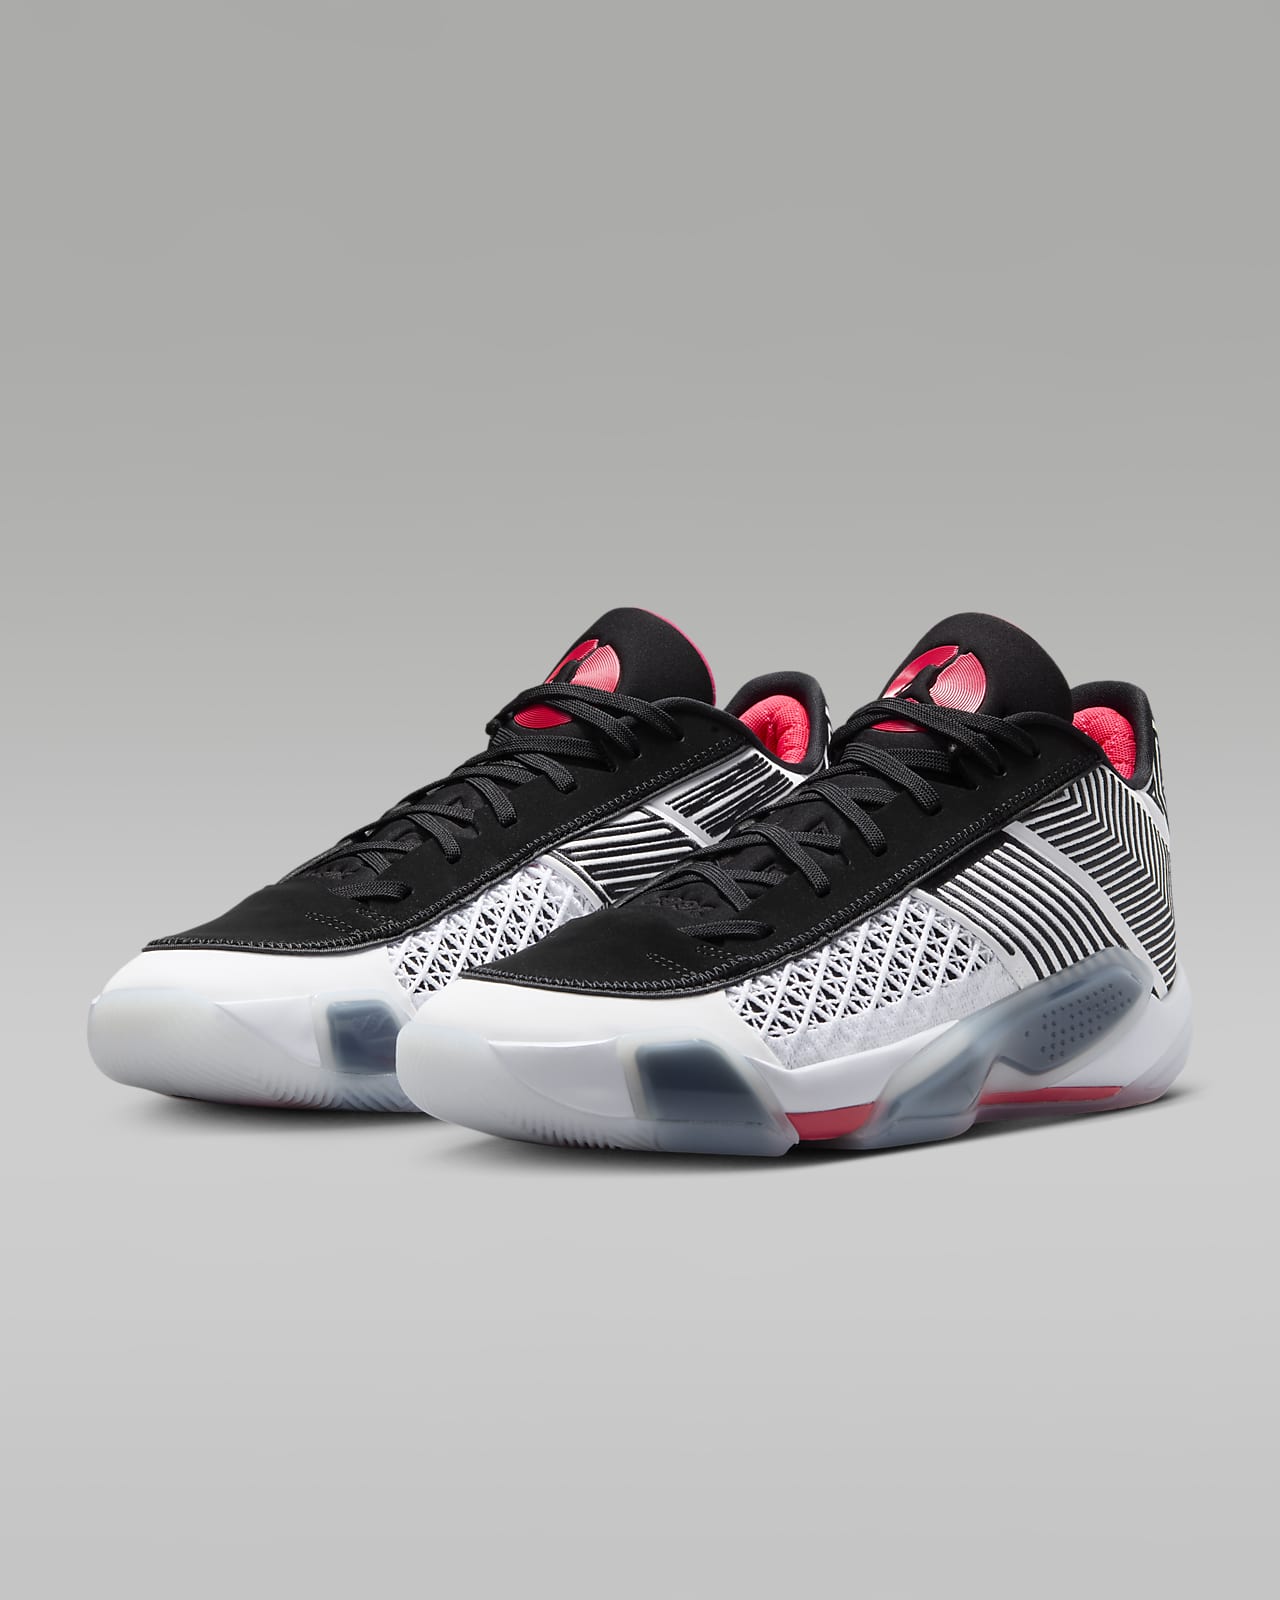 Air Jordan XXXVIII Low 'Fundamental' Basketball Shoes